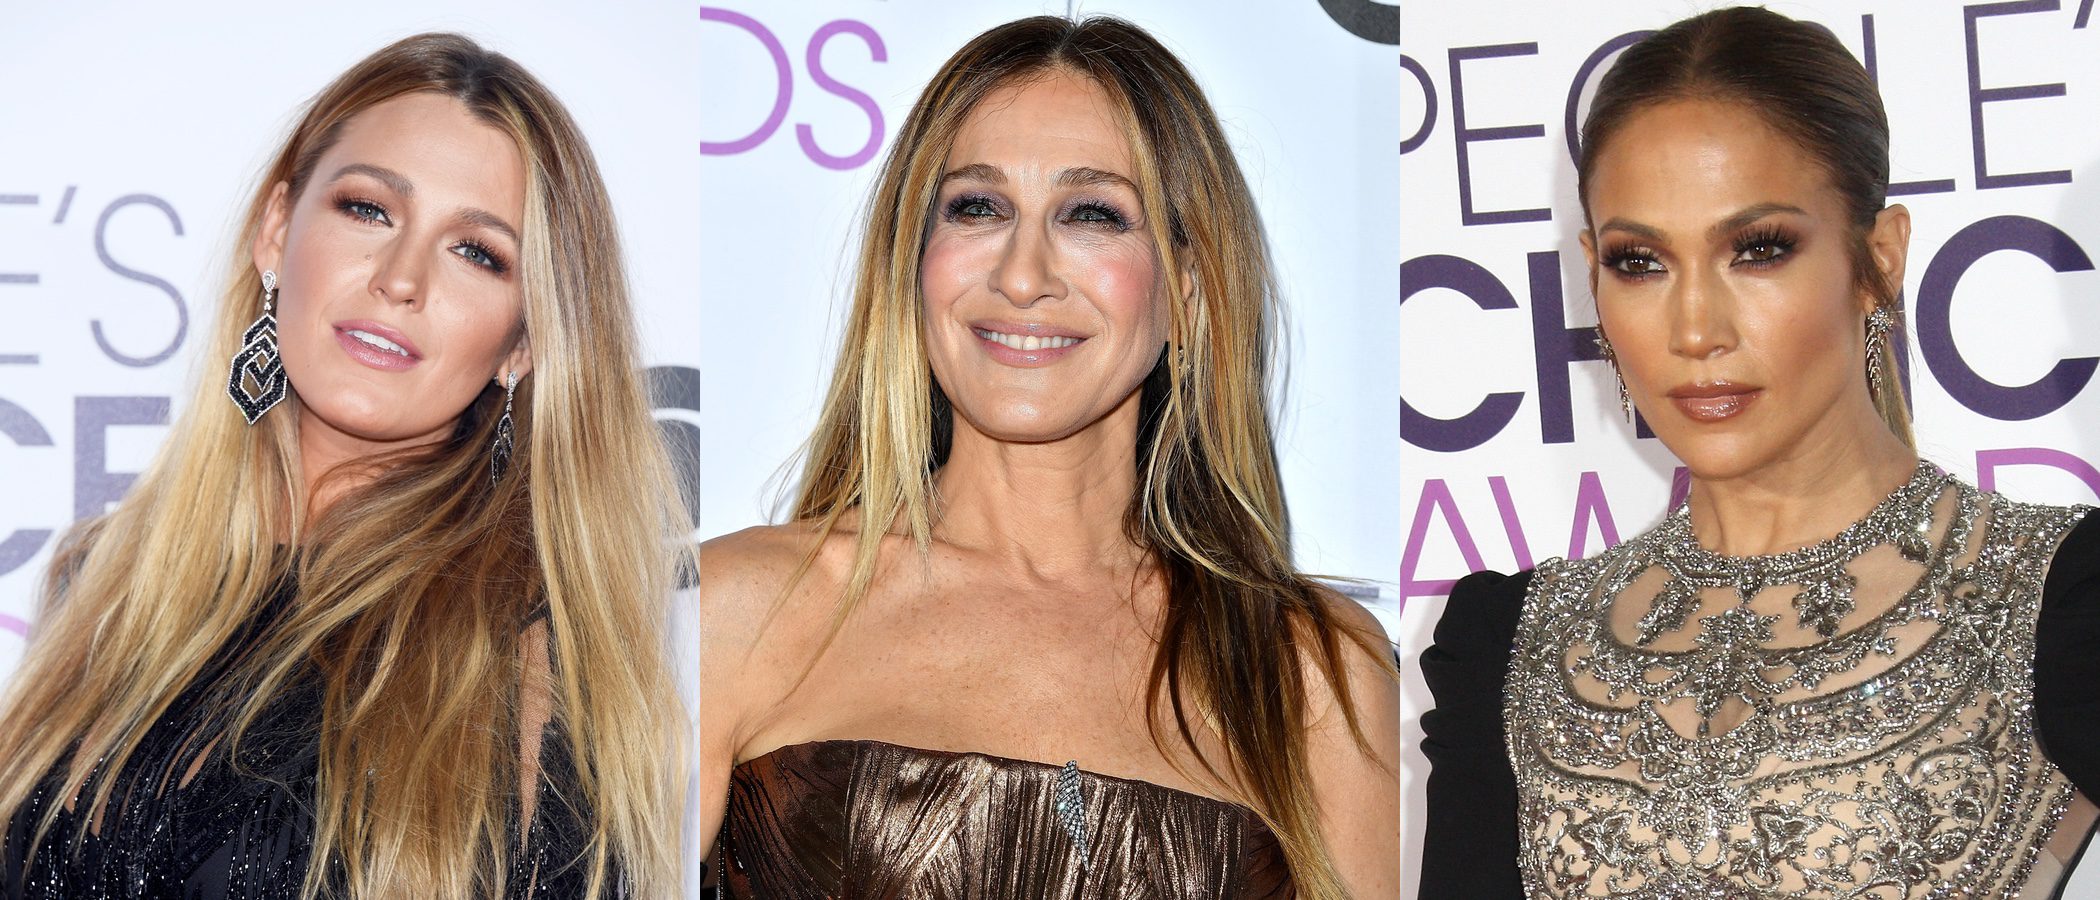 Blake Lively, Sarah Jessica Parker y JLo, entre los peores beauty looks de los People's Choice Awards del 2017